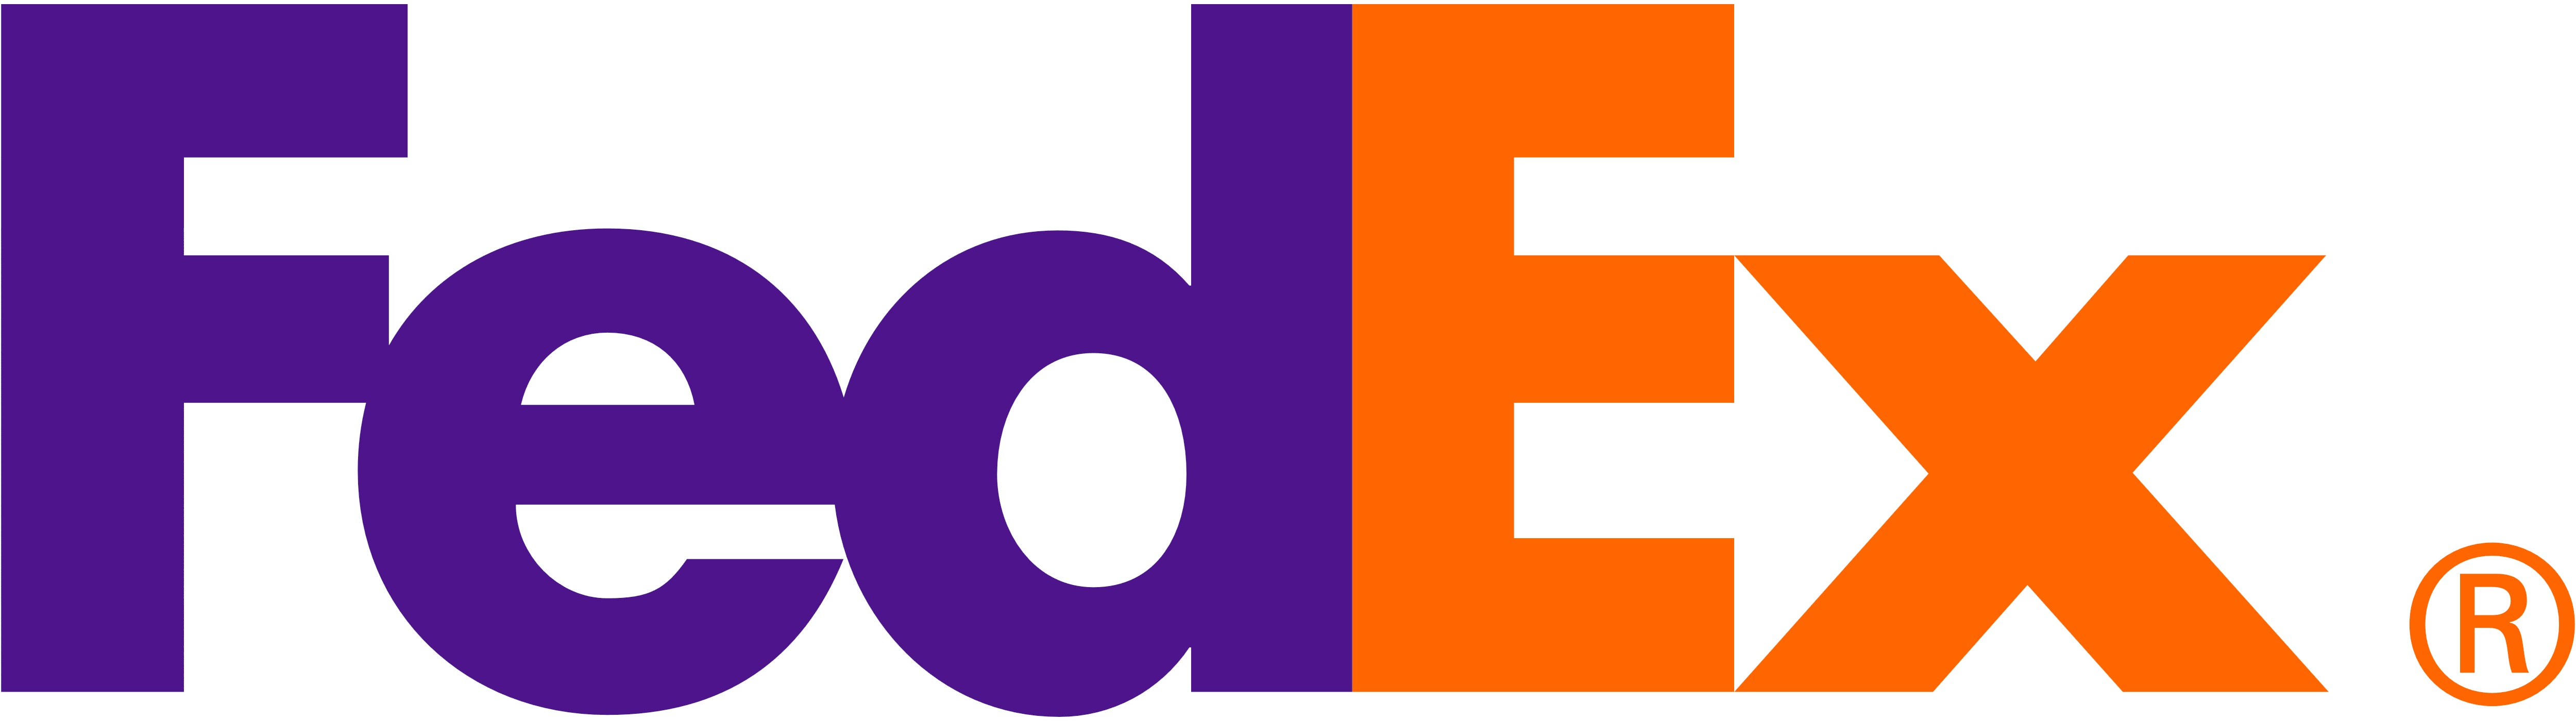 FedEx_logo_orange-purple.png